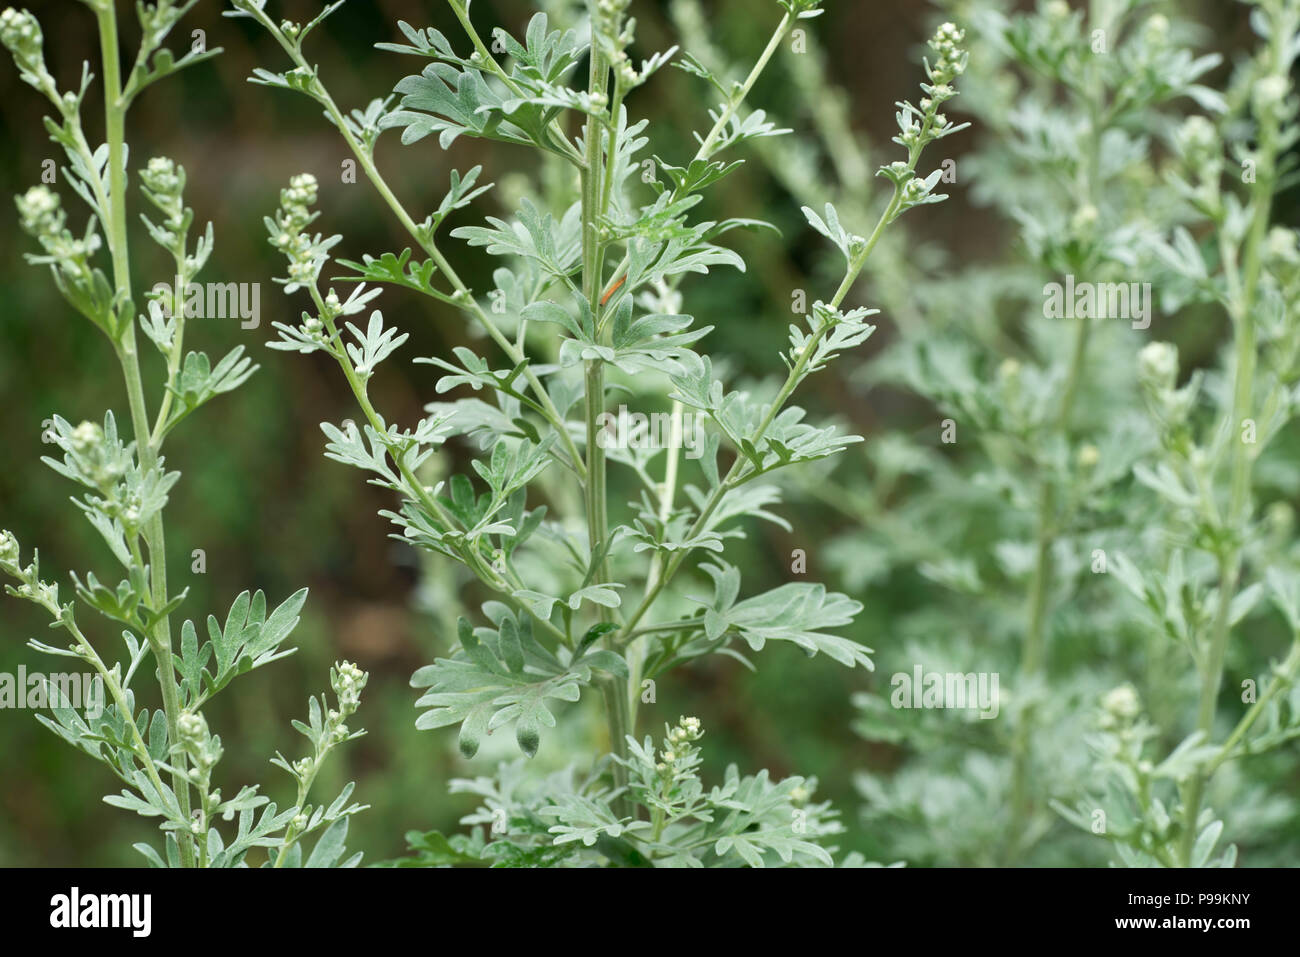 Artemisia Absinthium Wermut Unkraut closeup Stockfotografie   Alamy